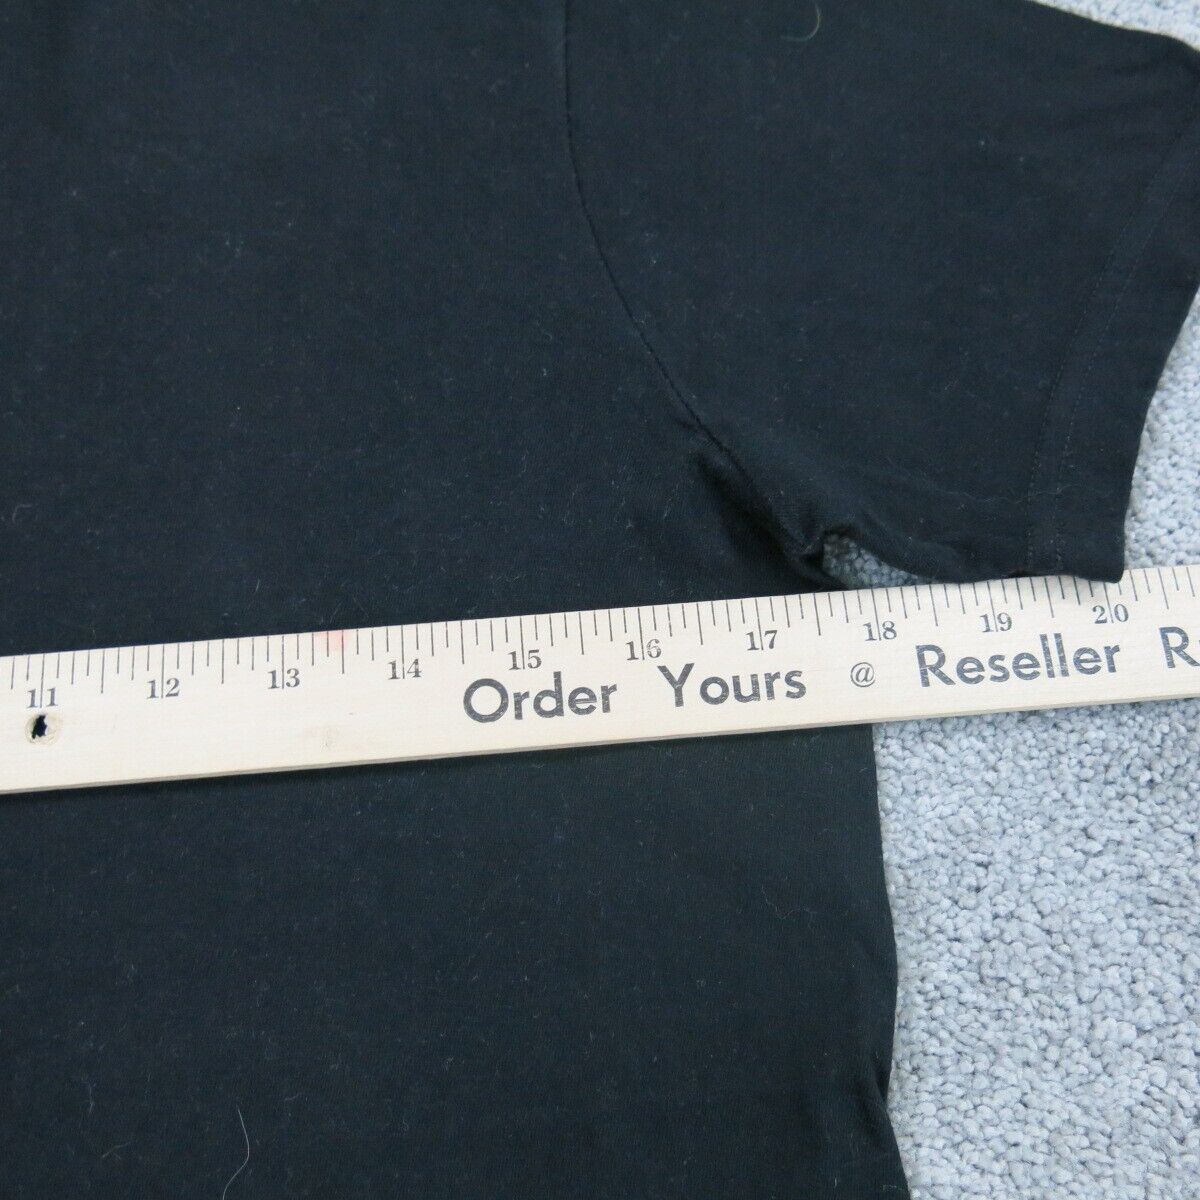 Polo Ralph Lauren Mens T Shirt Classic Fit 100% Cotton Black Logo Size Small